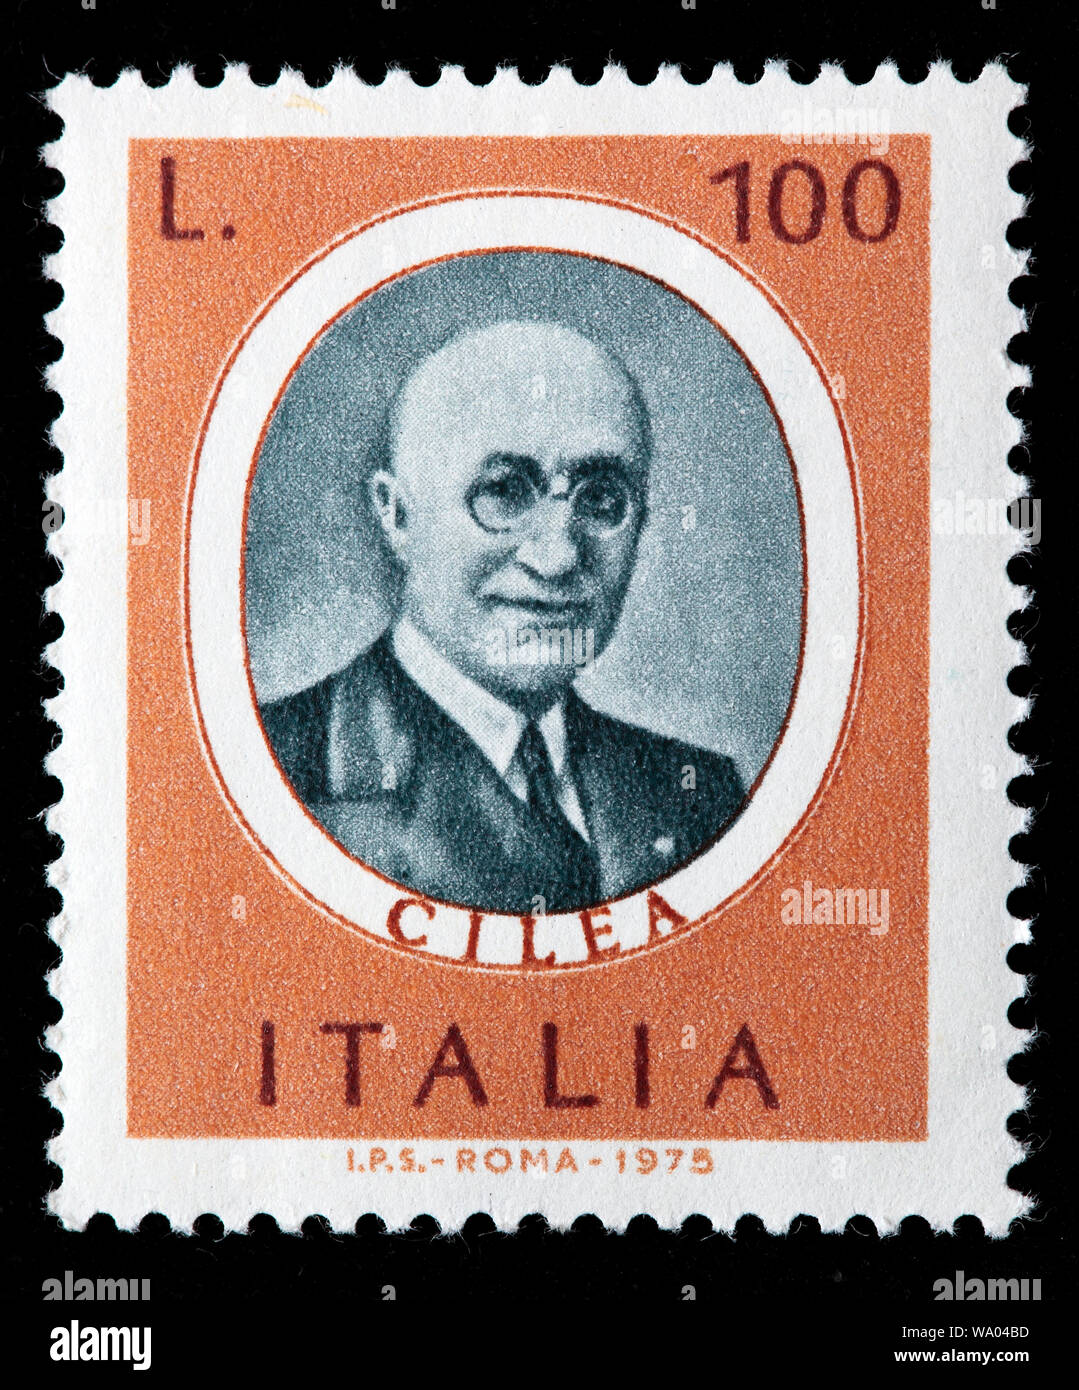 Francesco Cilea, composer, postage stamp, Italy, 1975 Stock Photo